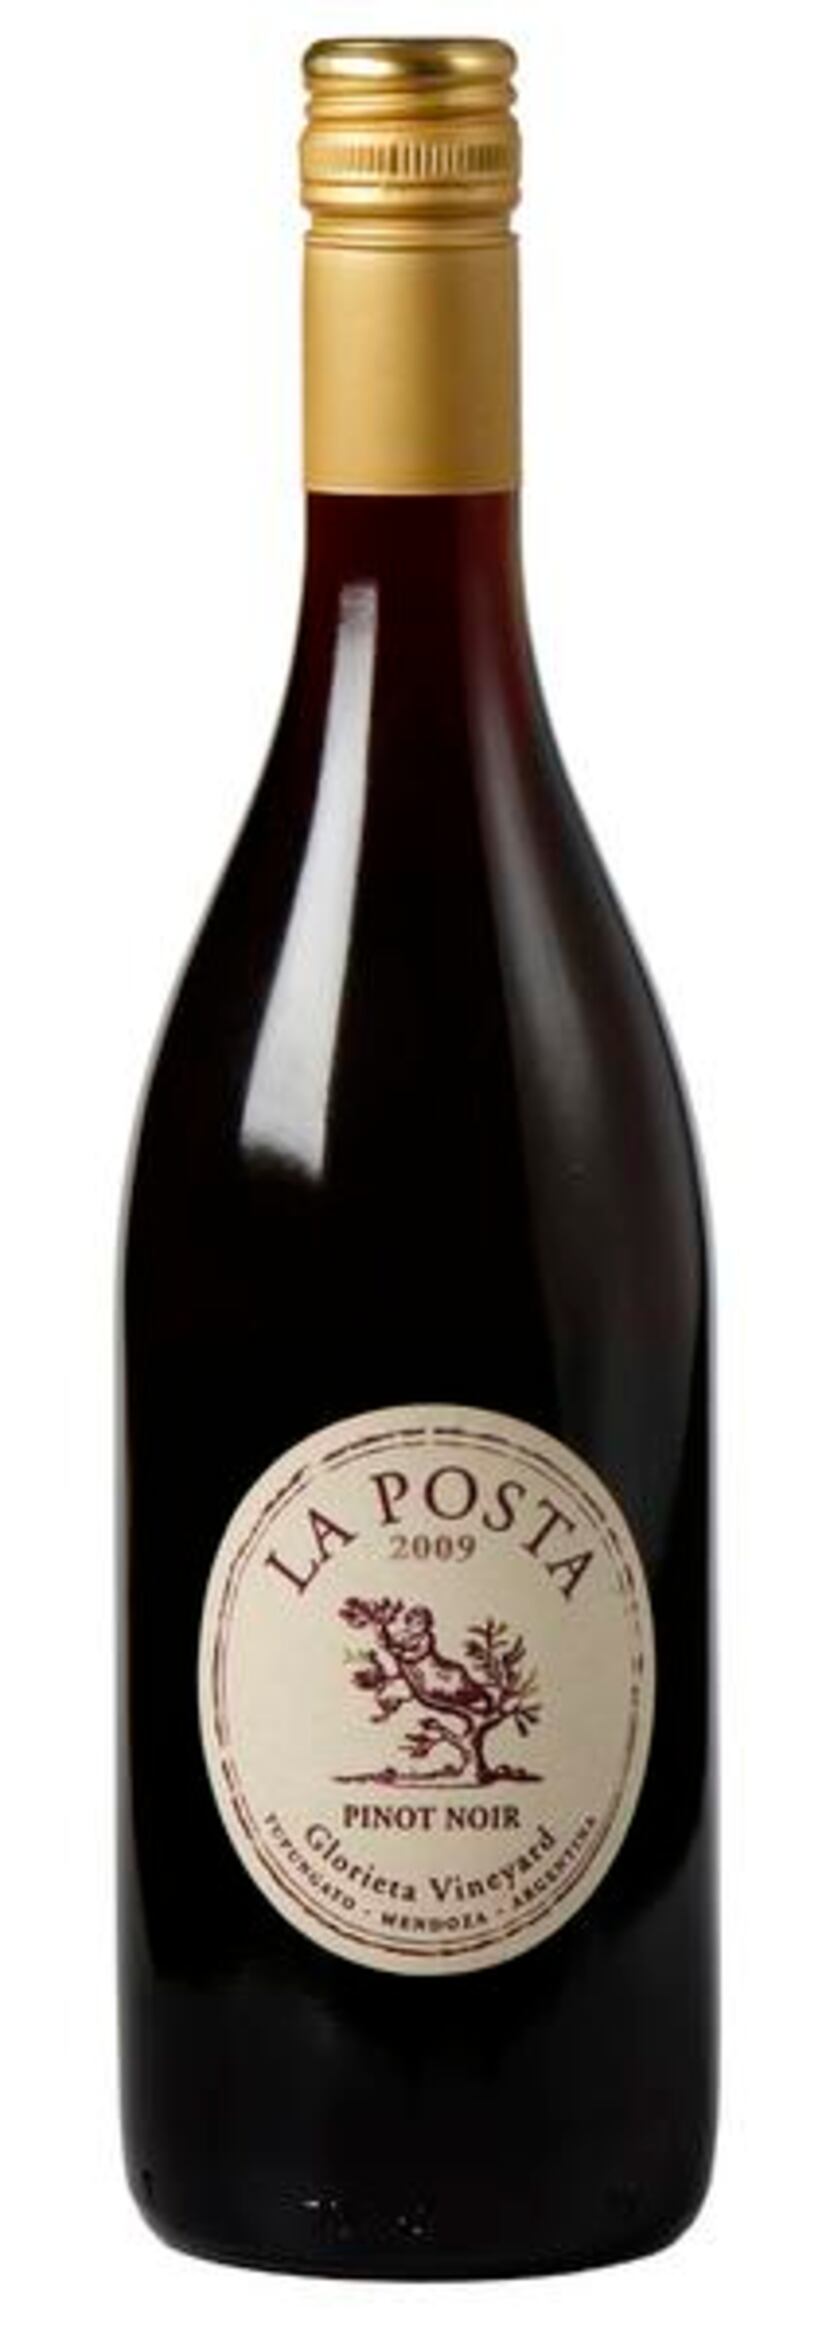 
La Posta Glorieta Vineyard Pinot Noir 2009. This is a fruity, medium-bodied pinot noir with...